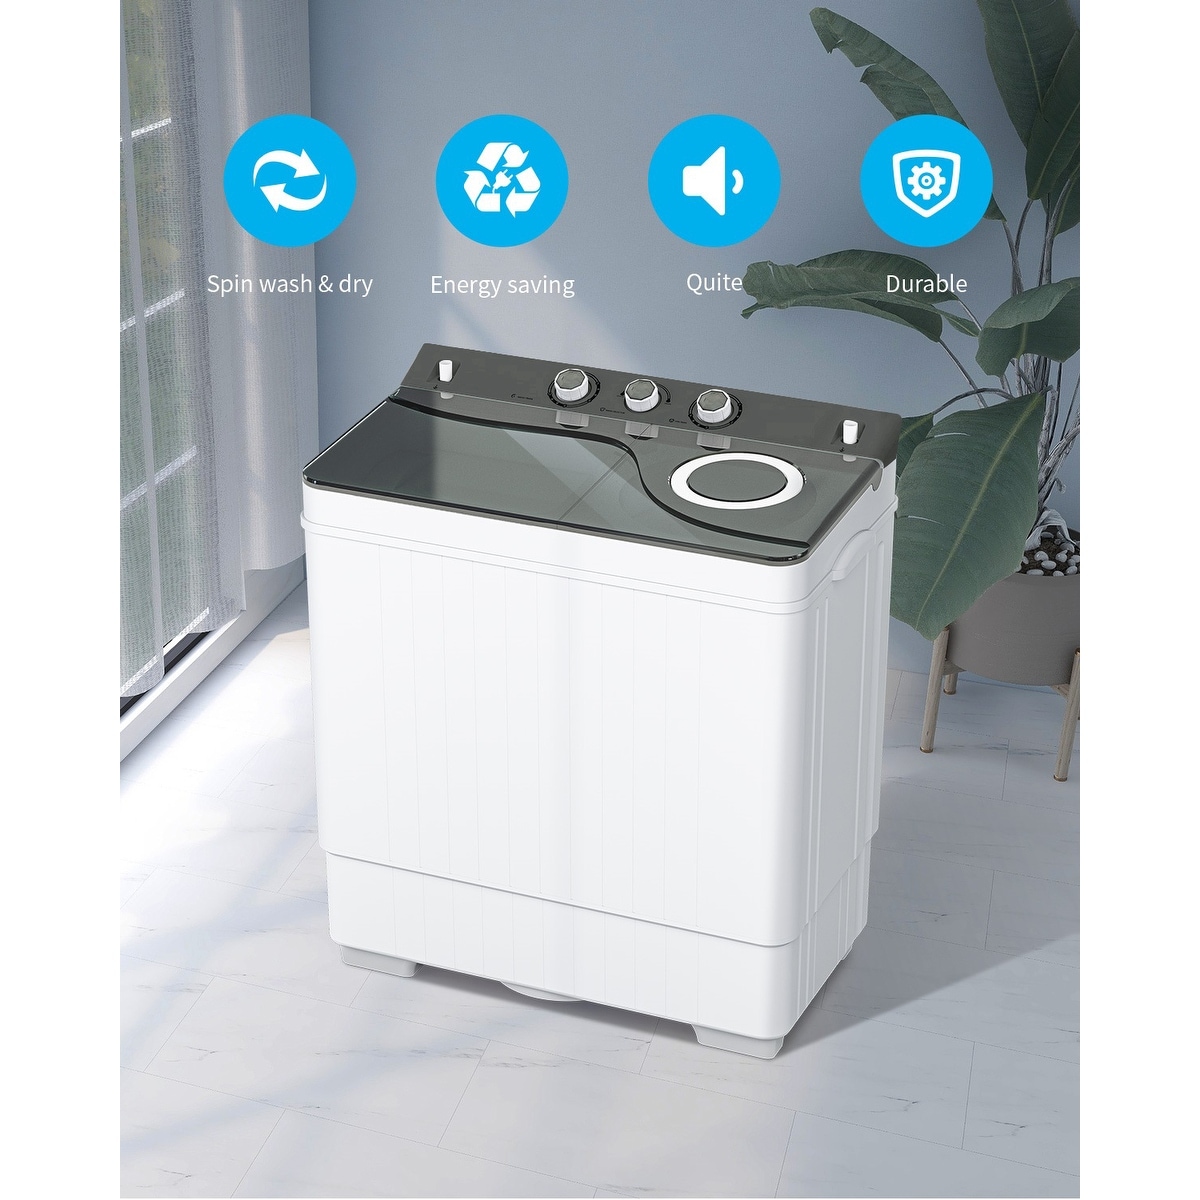 Winado 21.26 in. 14.3 lbs. Portable Top Load Semi-Automatic Twin Tube Washing Machine in White, Gray